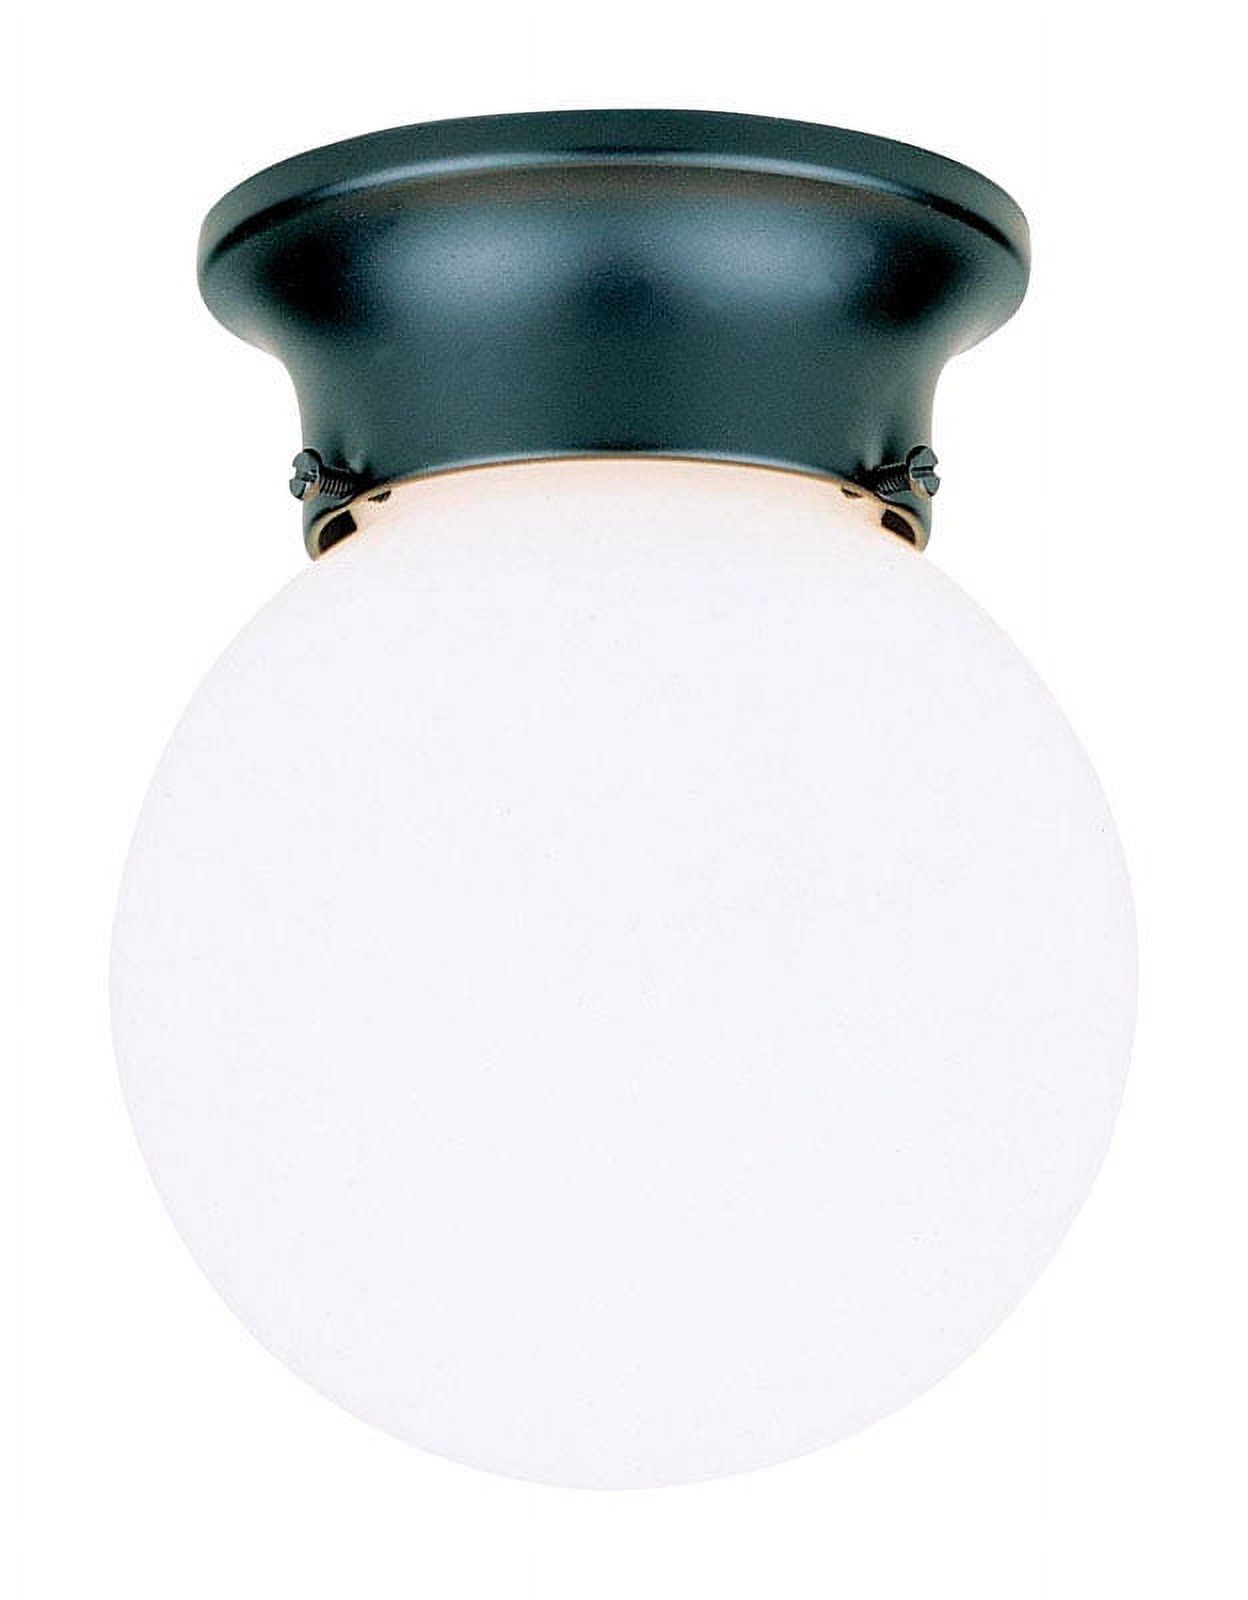 Westinghouse Gloss Black Incandescent Light Fixture - image 1 of 2